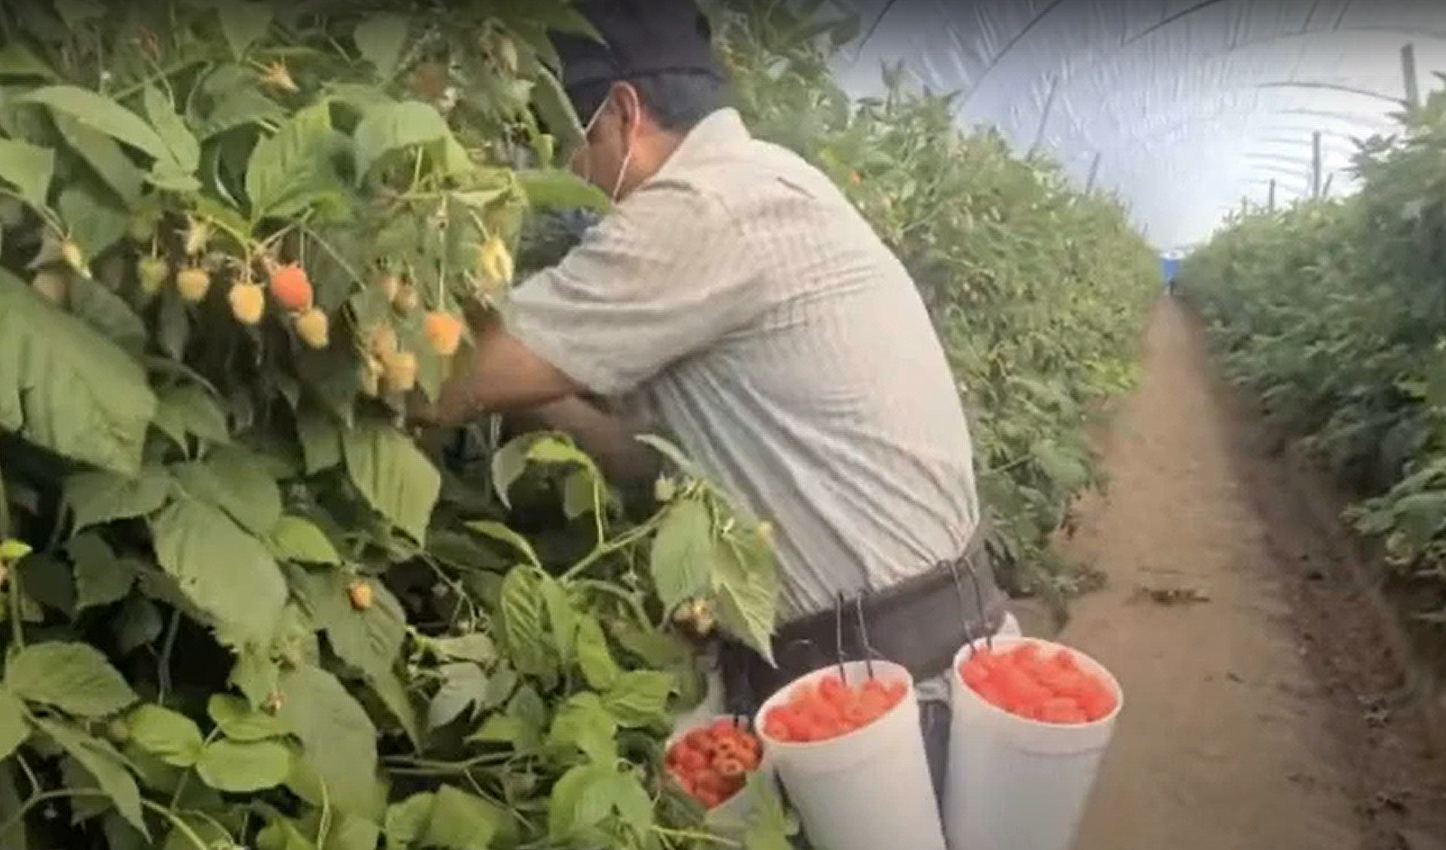 farmworker picking berries